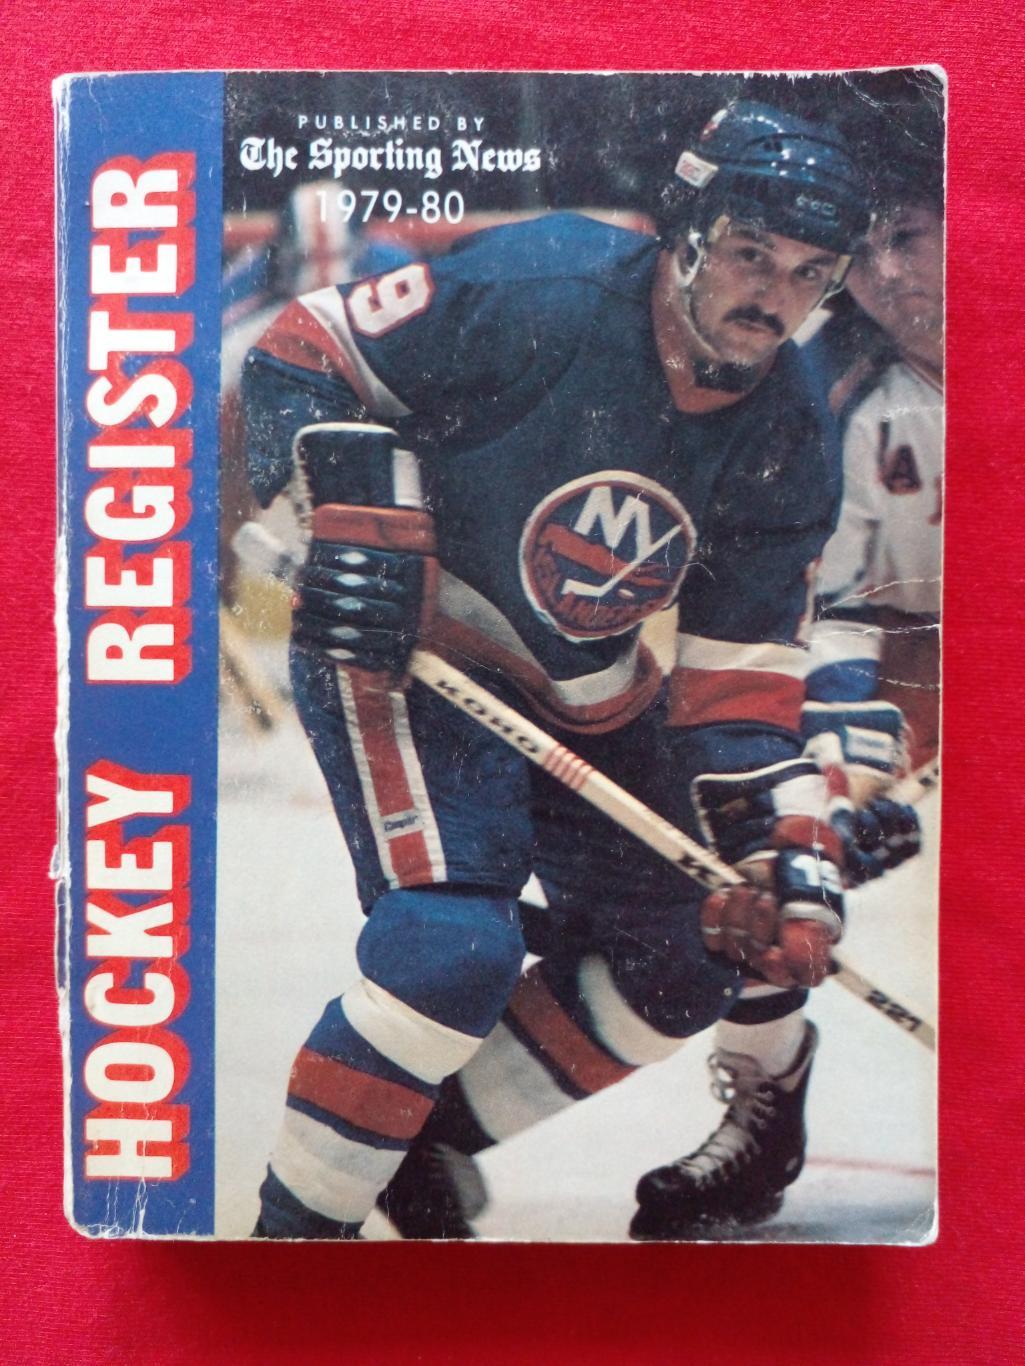 Хоккей. Справочник - Ежегодник 1979-80 HOCKEY REGISTER. Канада, США